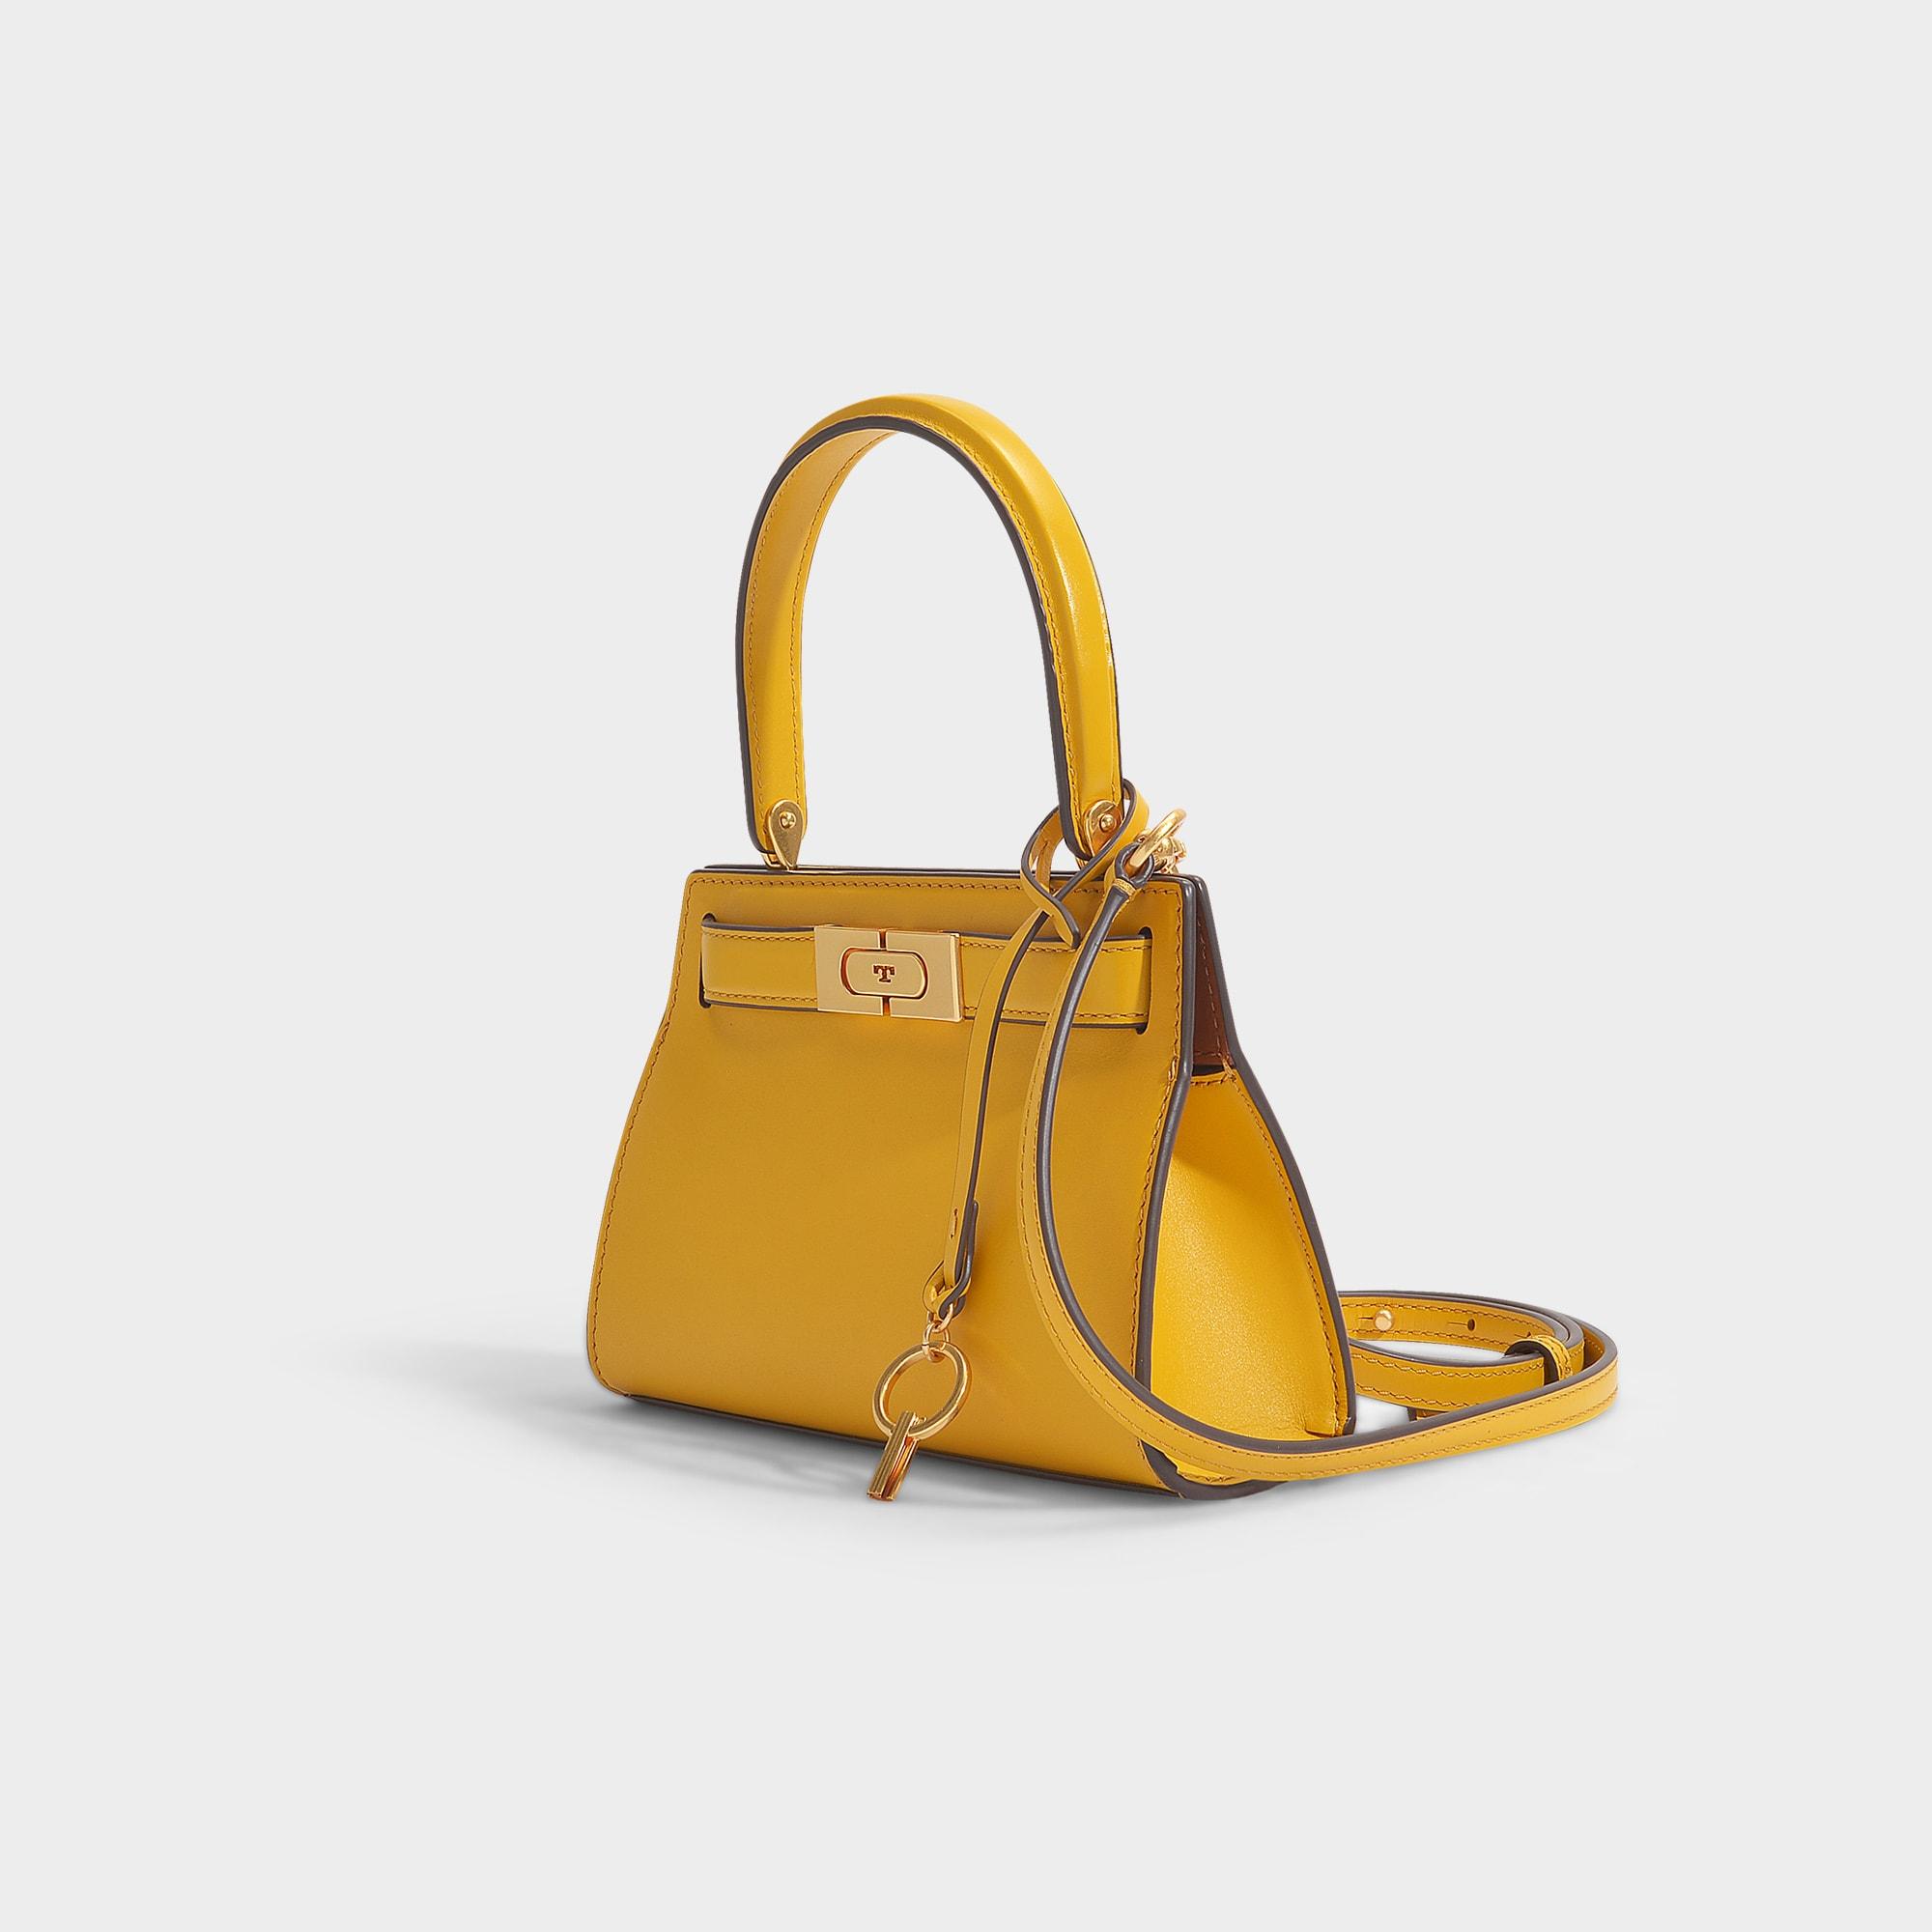 Tory Burch Lee Radziwill Petite Bag in Yellow | Lyst